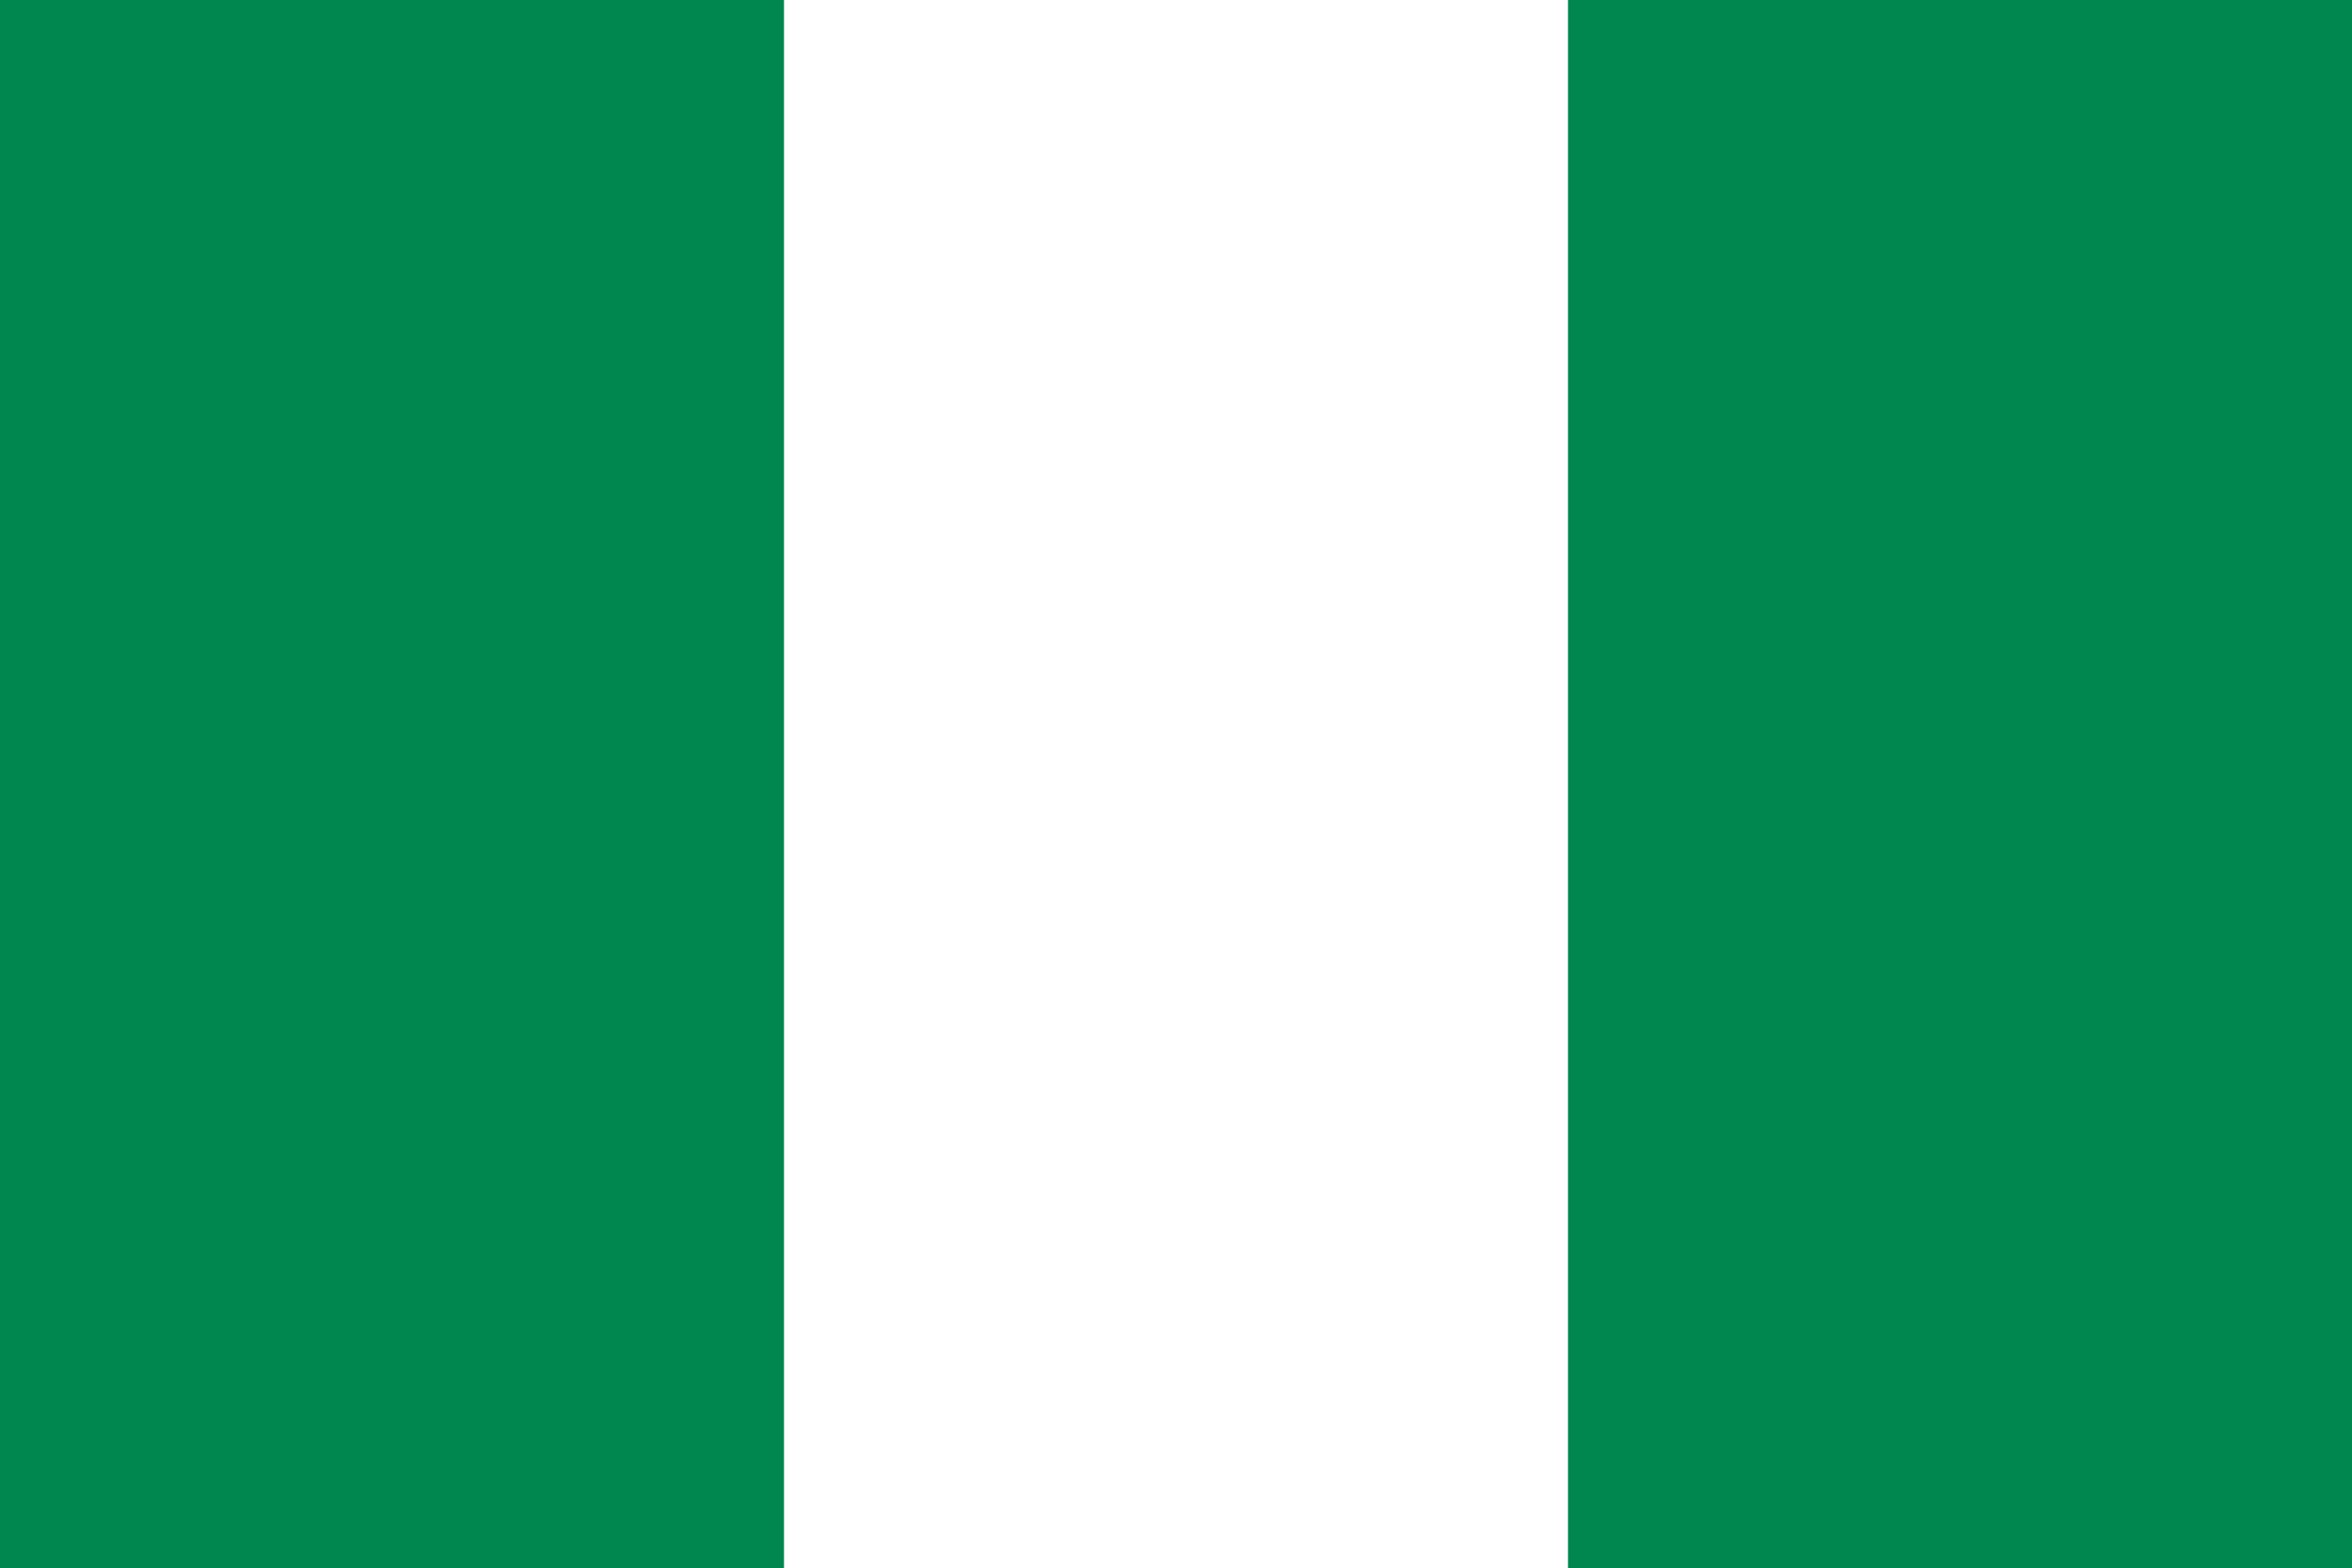 The Nigeria Flag